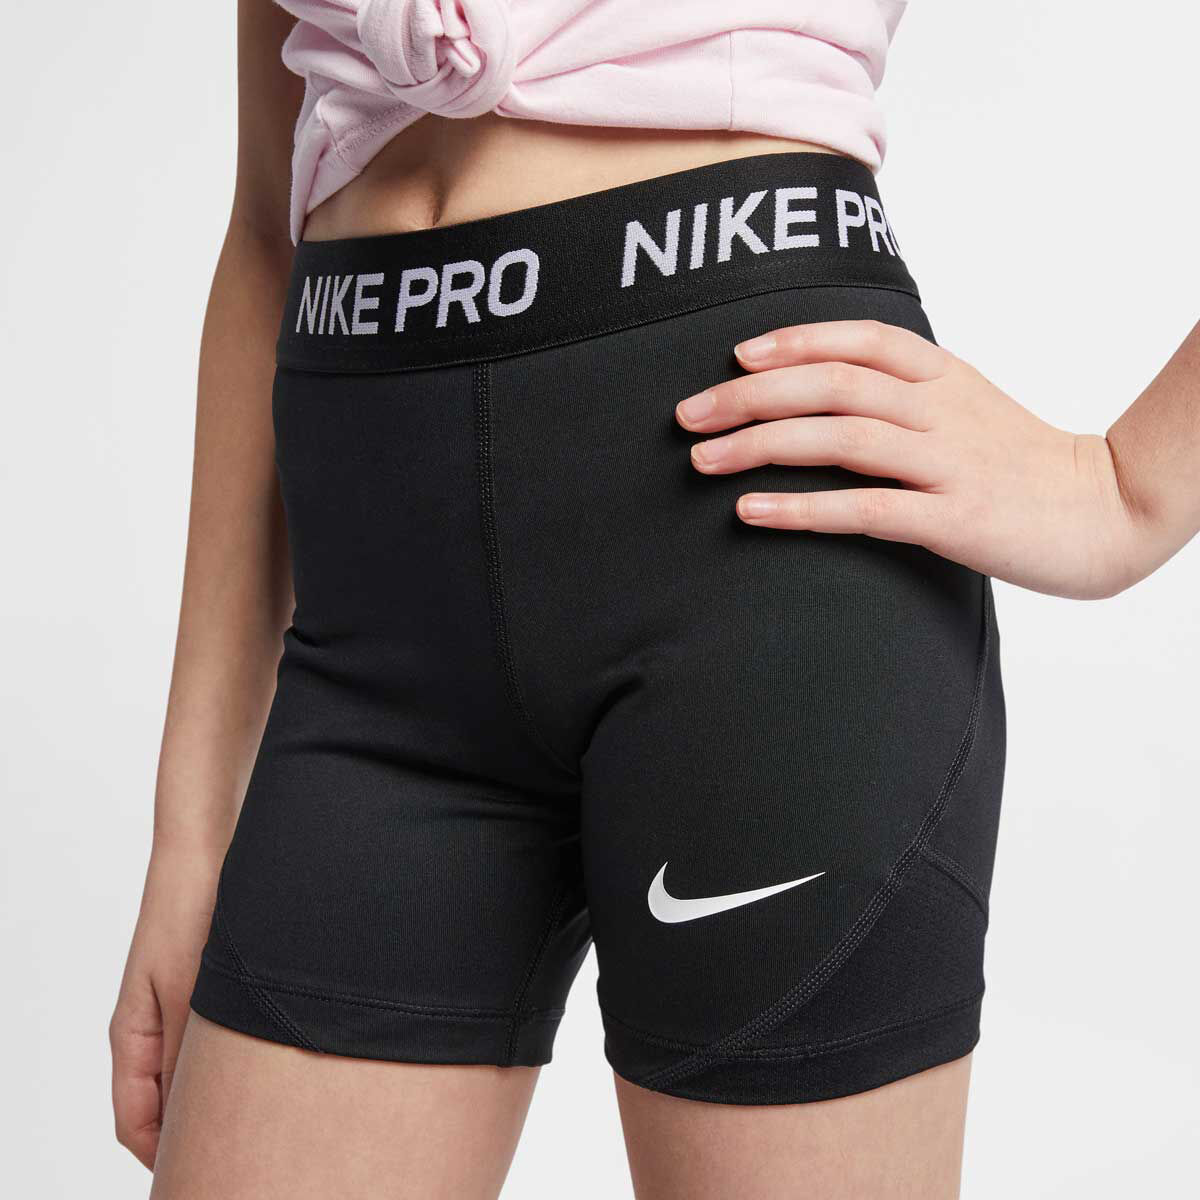 nike pro shorts rebel sport